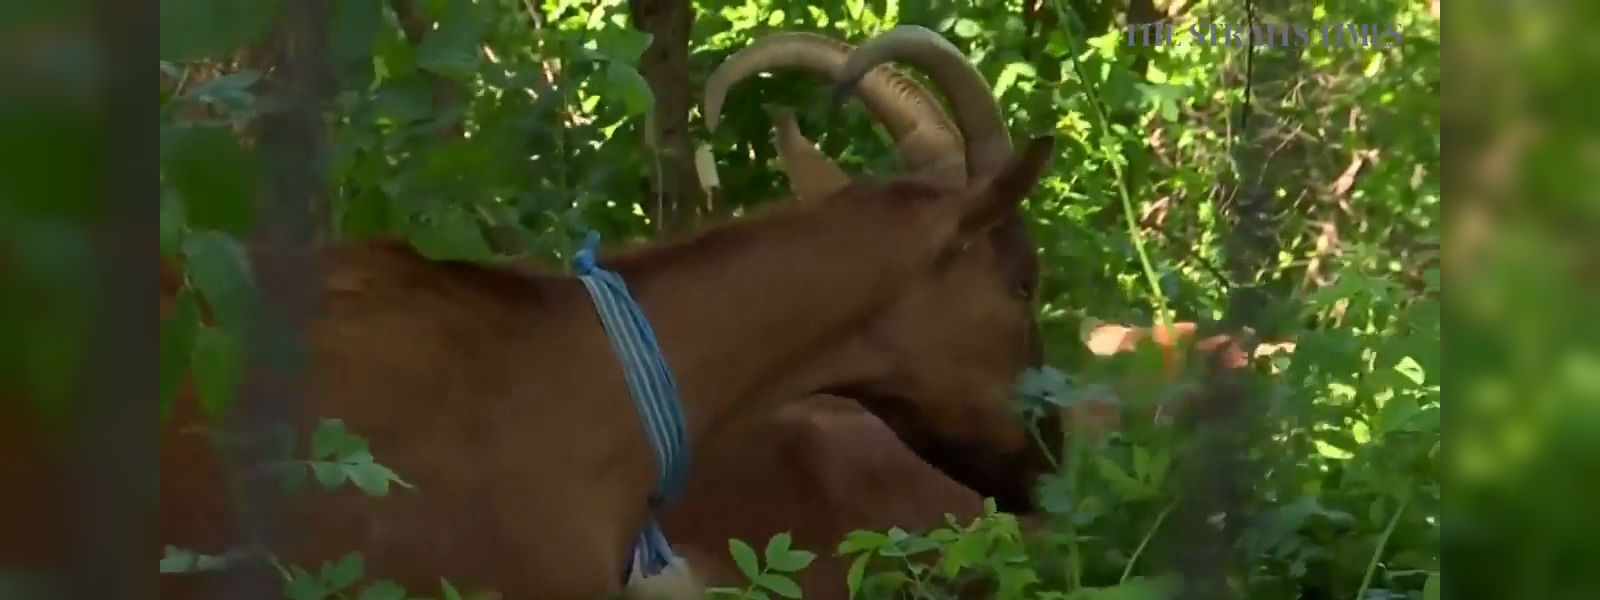 Goats eat their way through Riverside Park